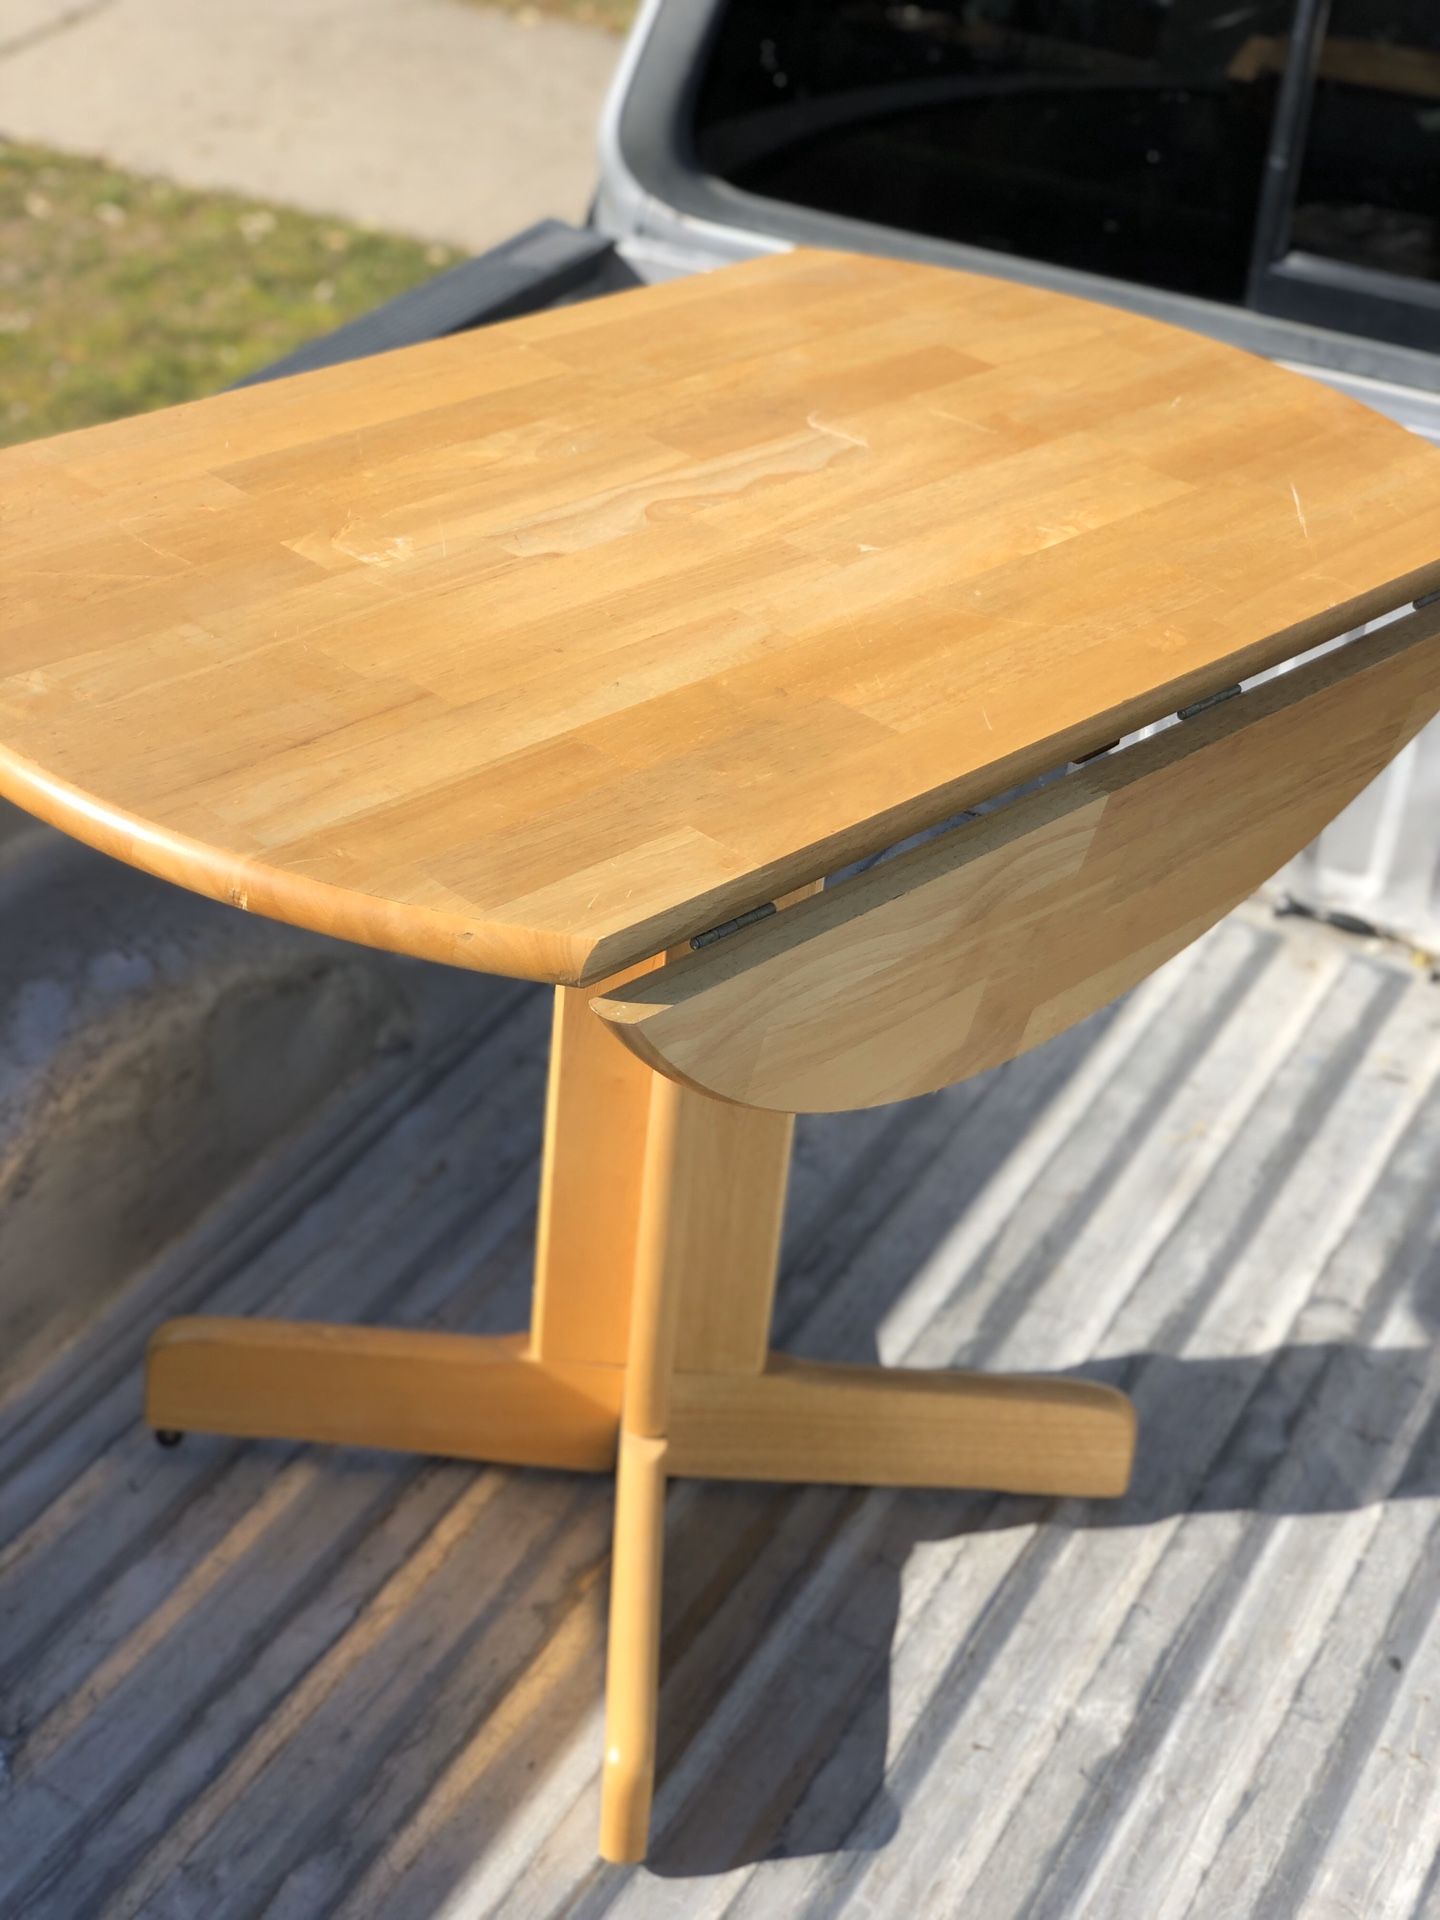 Drop down leaf Wood Table